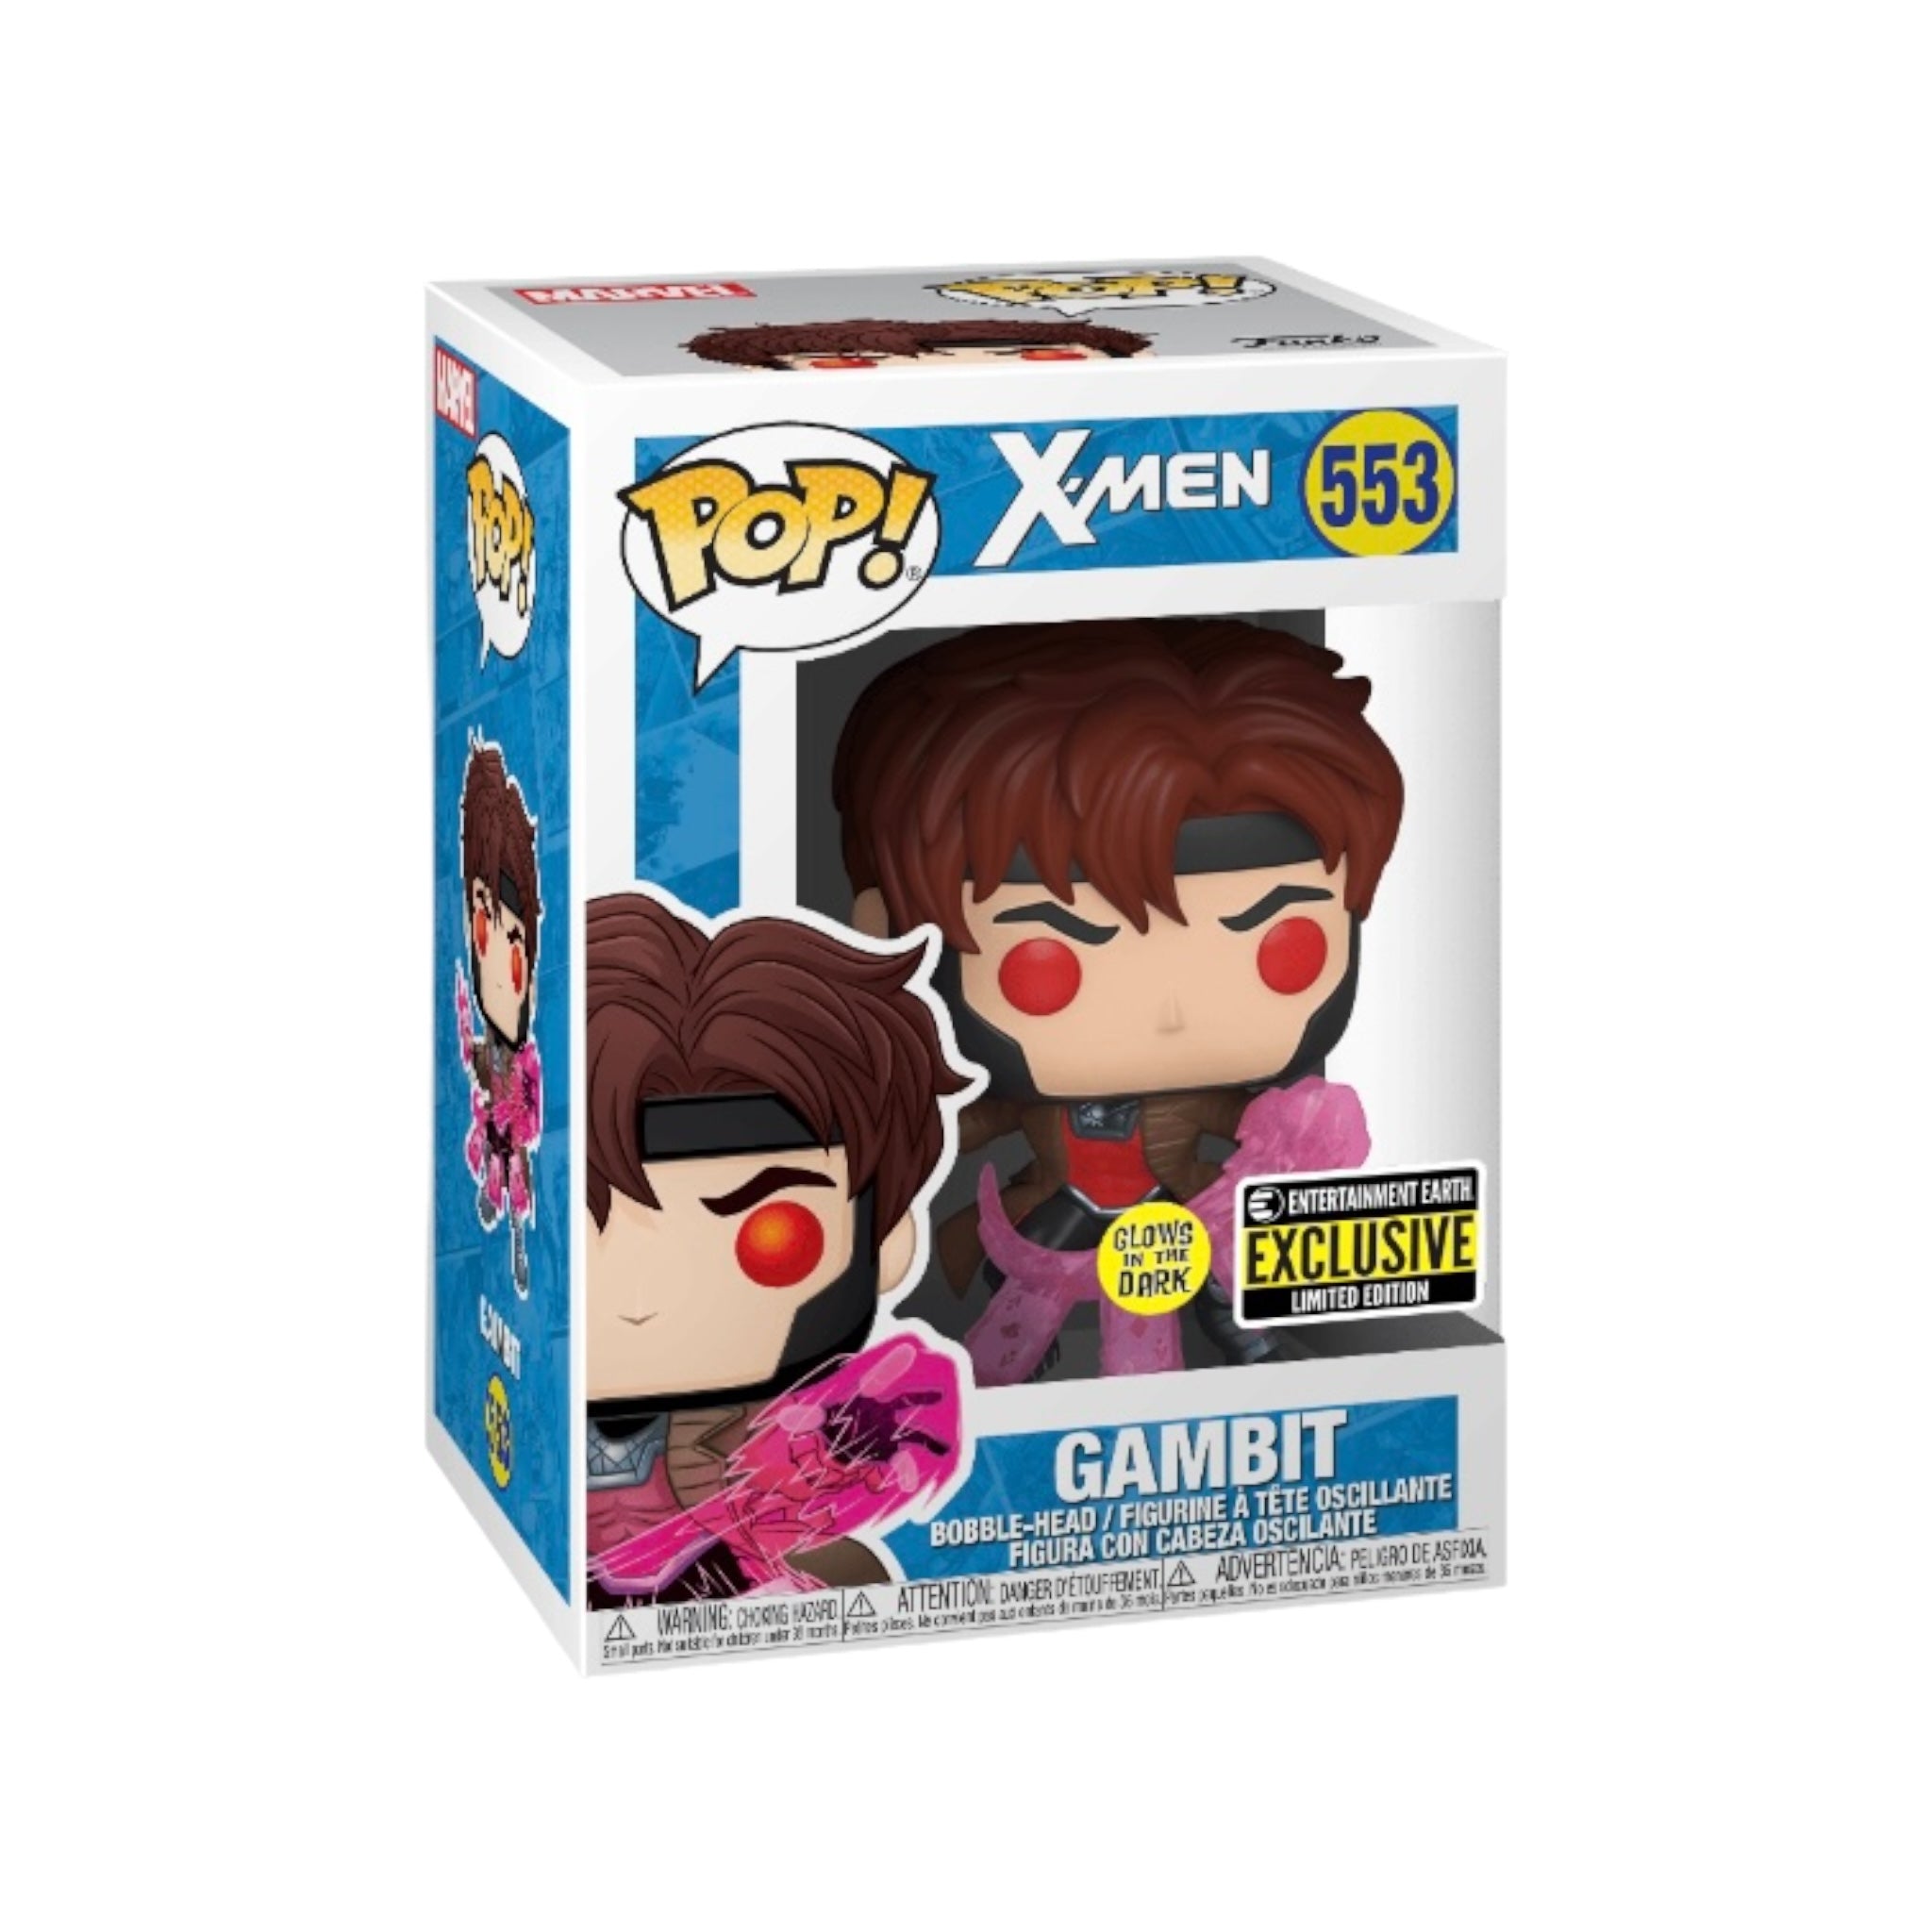 Gambit #553 (Glows in the Dark) Funko Pop! - X-Men - Entertainment Earth Exclusive